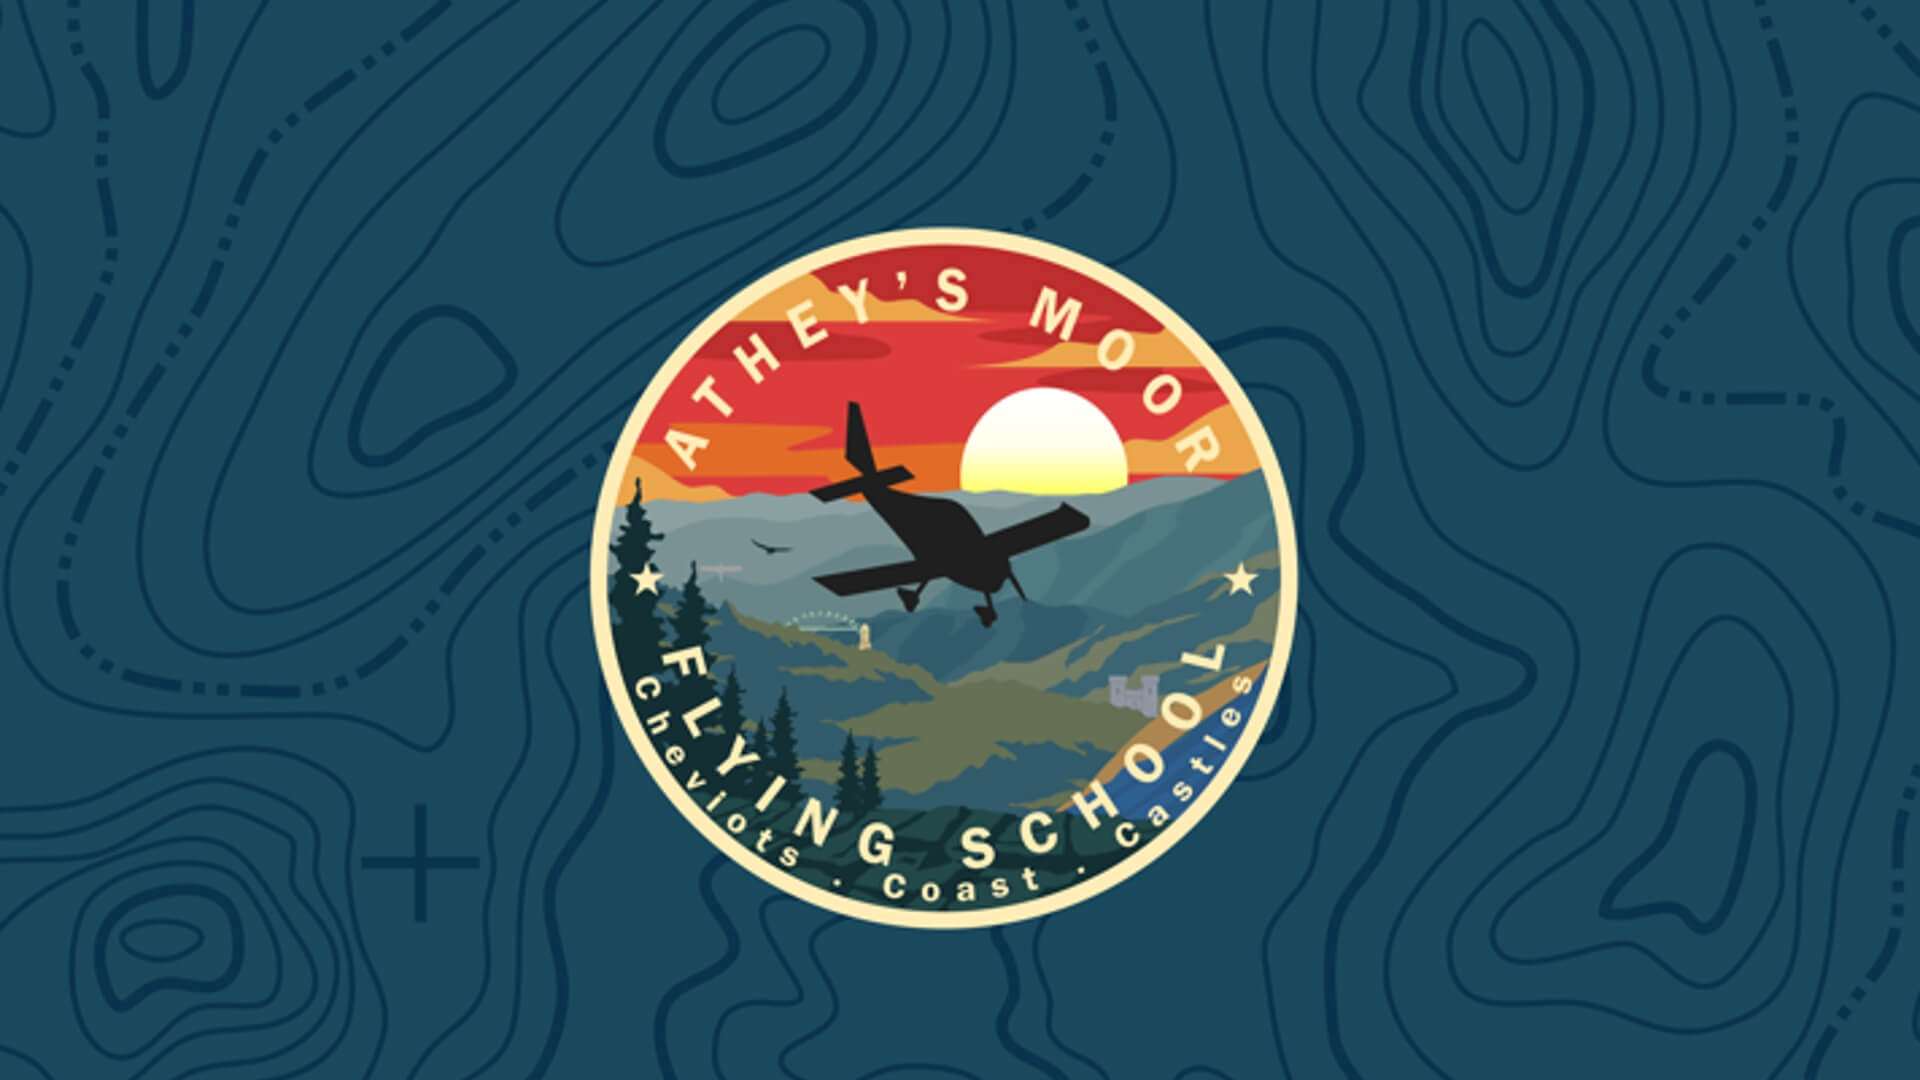 atheys-moor-flying-school-logo